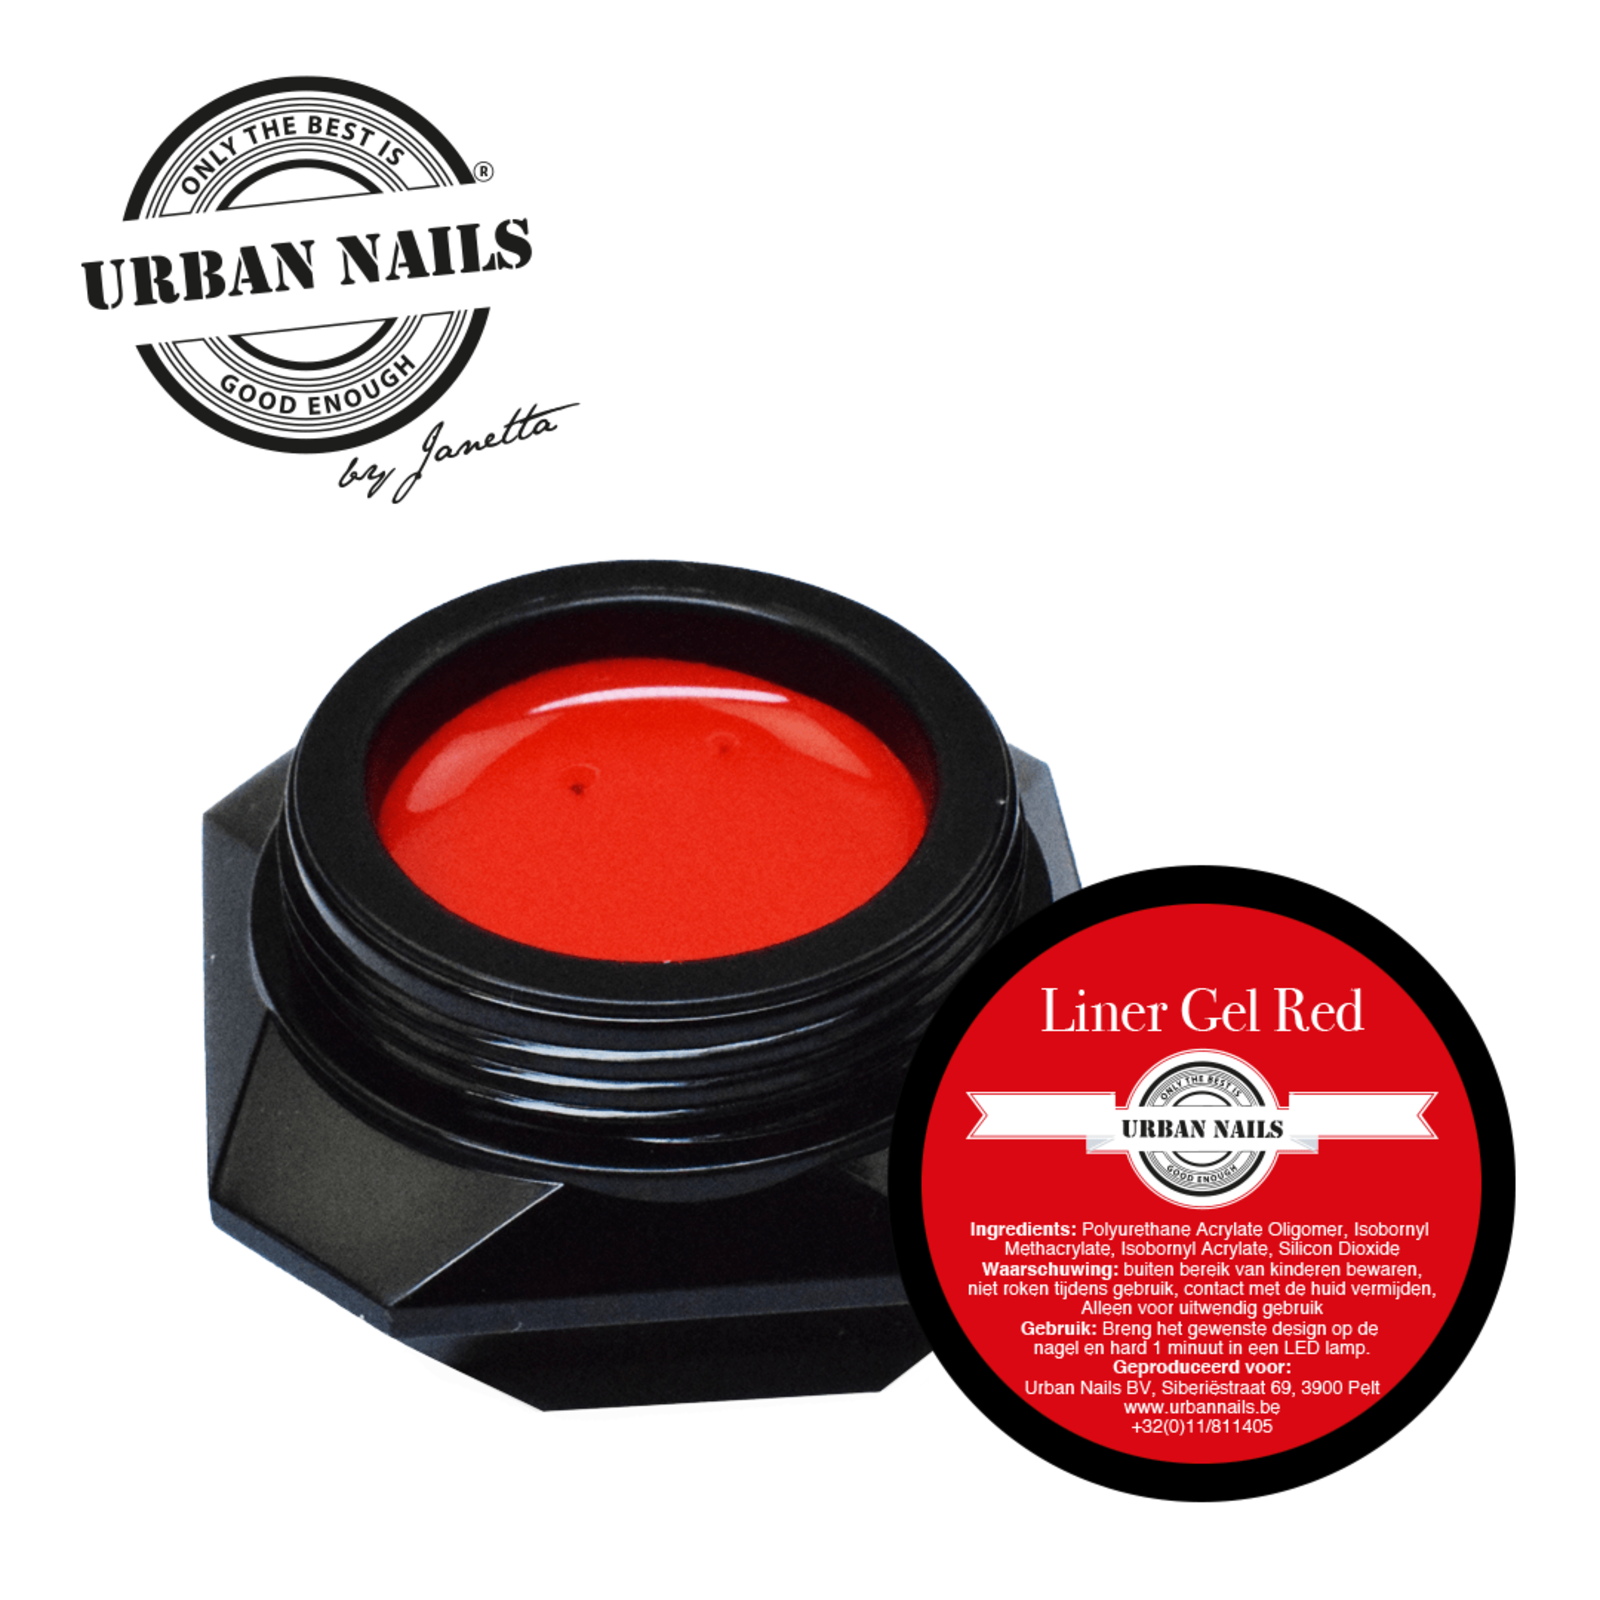 Urban nails Liner Gel Red